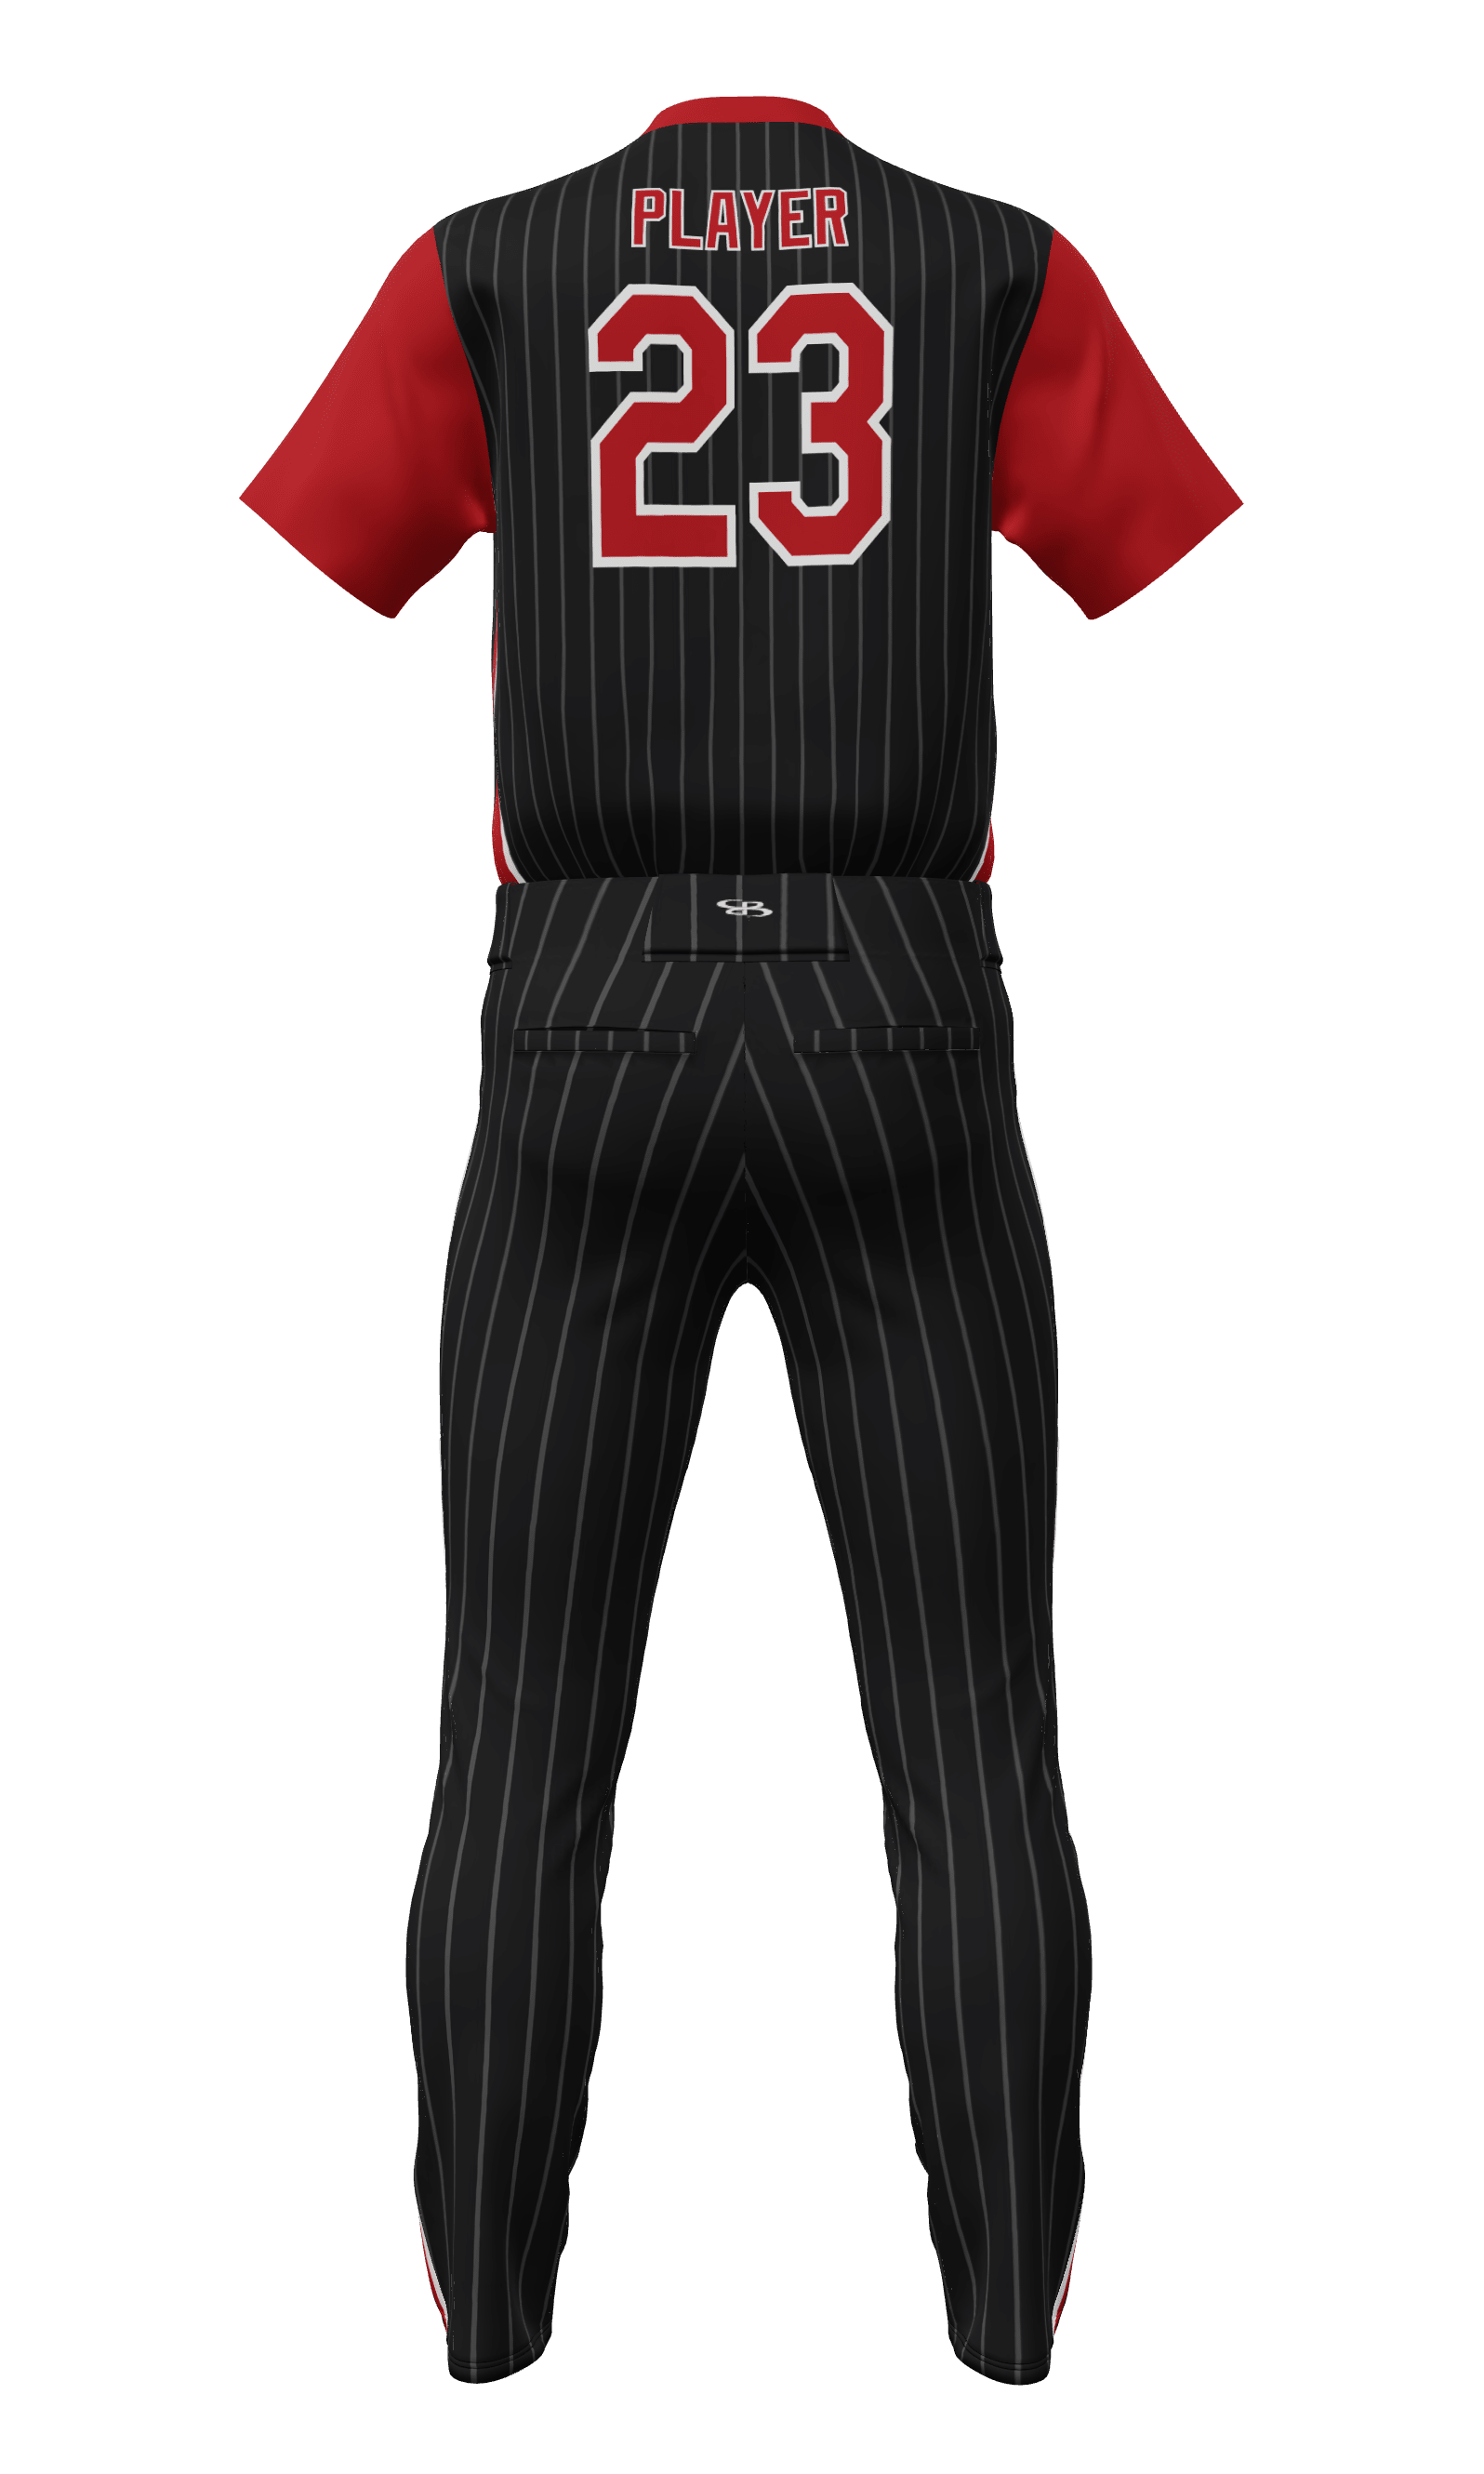 youth baseball uniform packages - baseball uniform deals